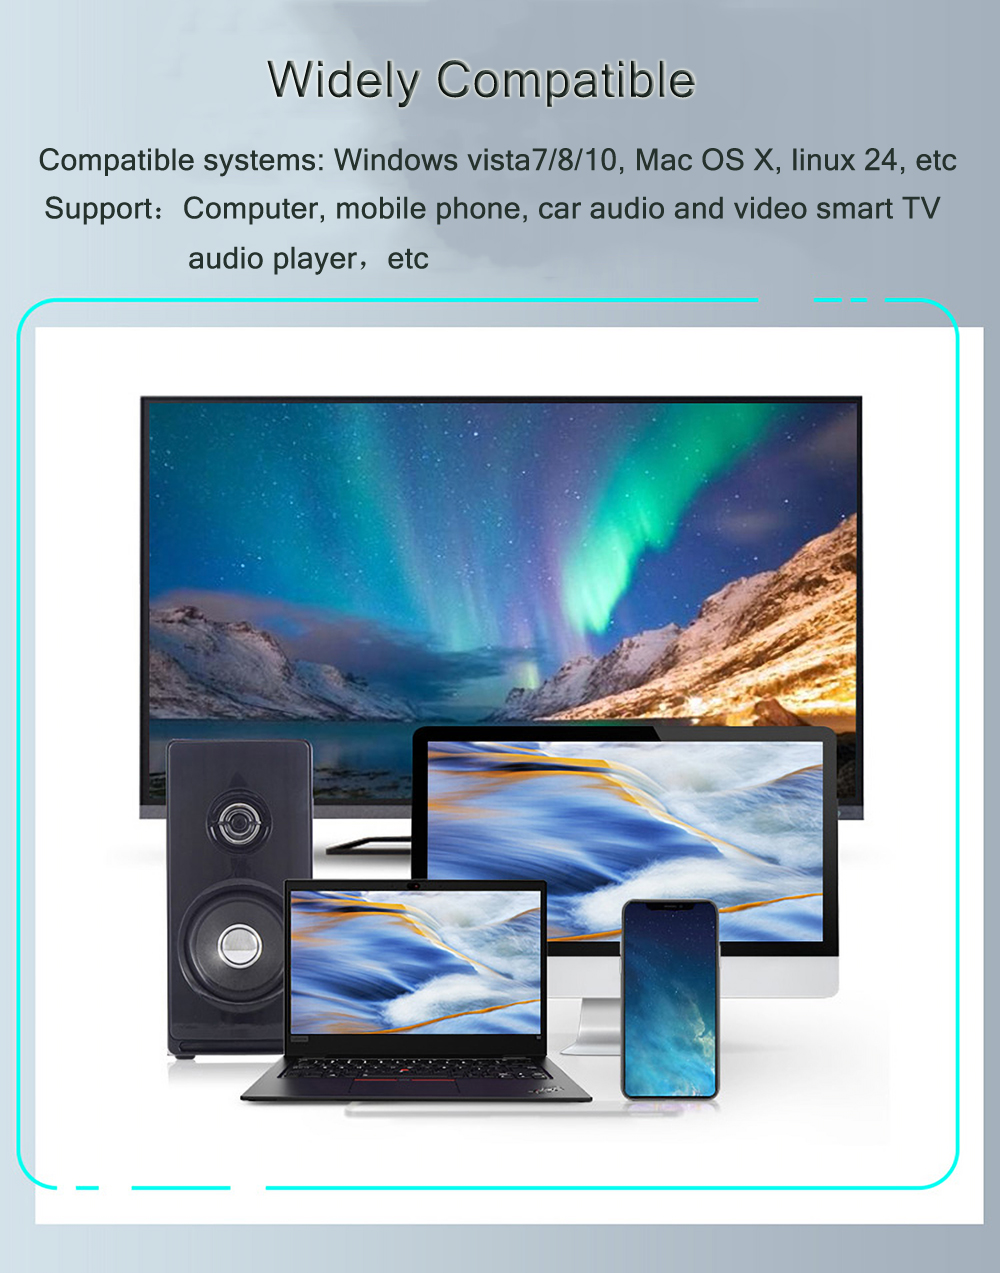 Lenovo-ThinkPlus-Cute-USB32-Gen1-Flash-Drives-Small-Black-Shockproof-Thumb-Drive-128G-64G-32G-Creati-1964259-4